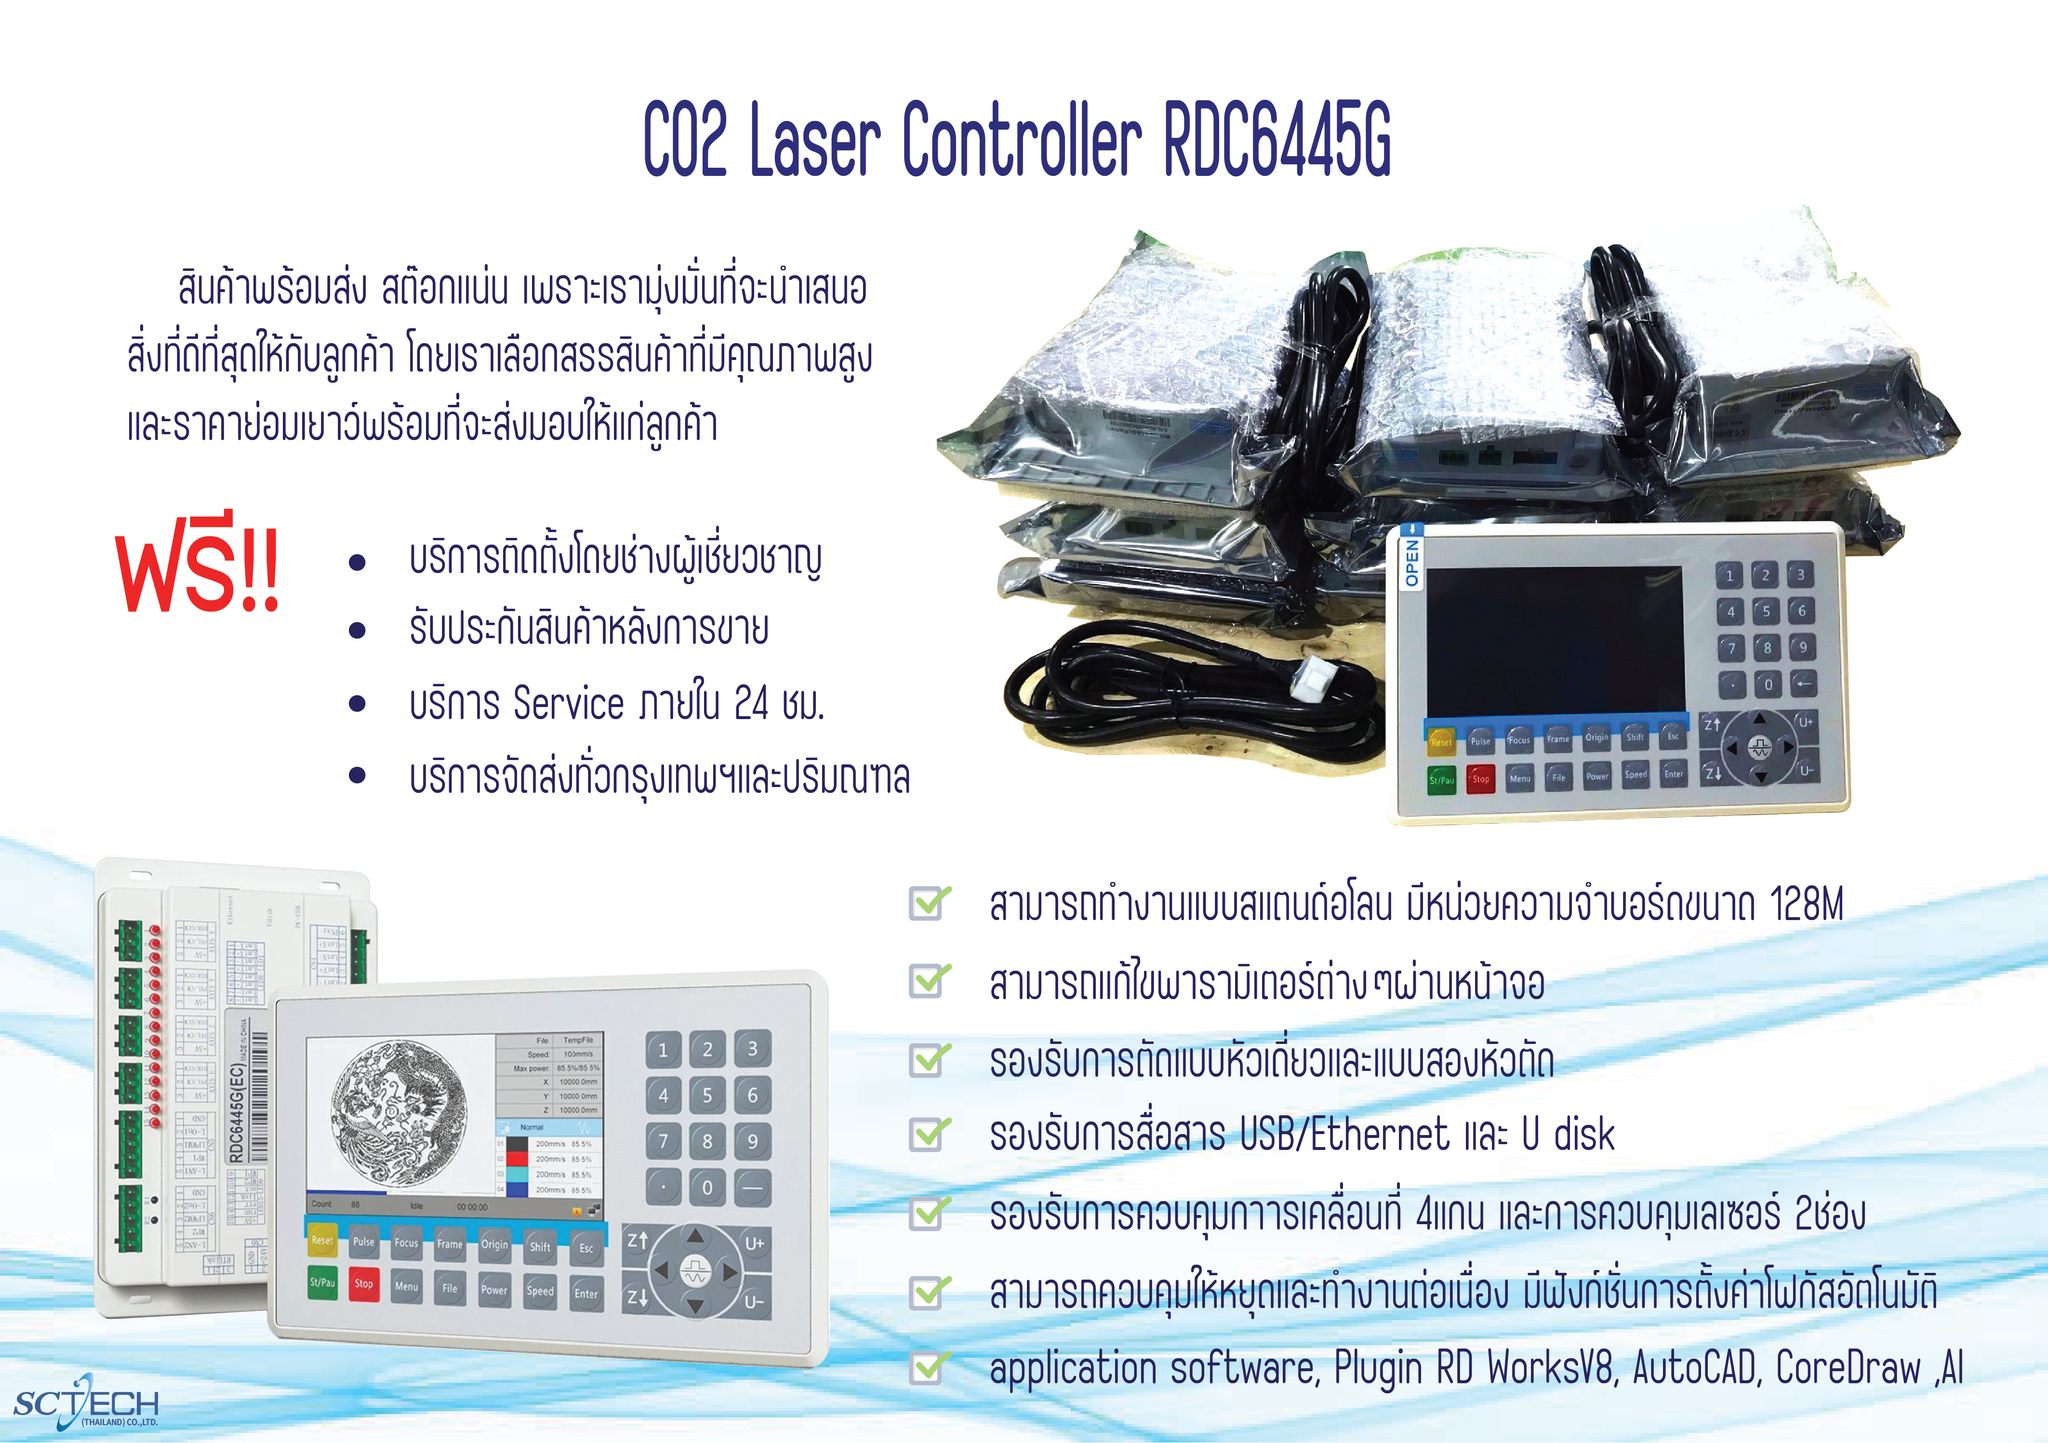 co2-laser-controller-banner.jpg